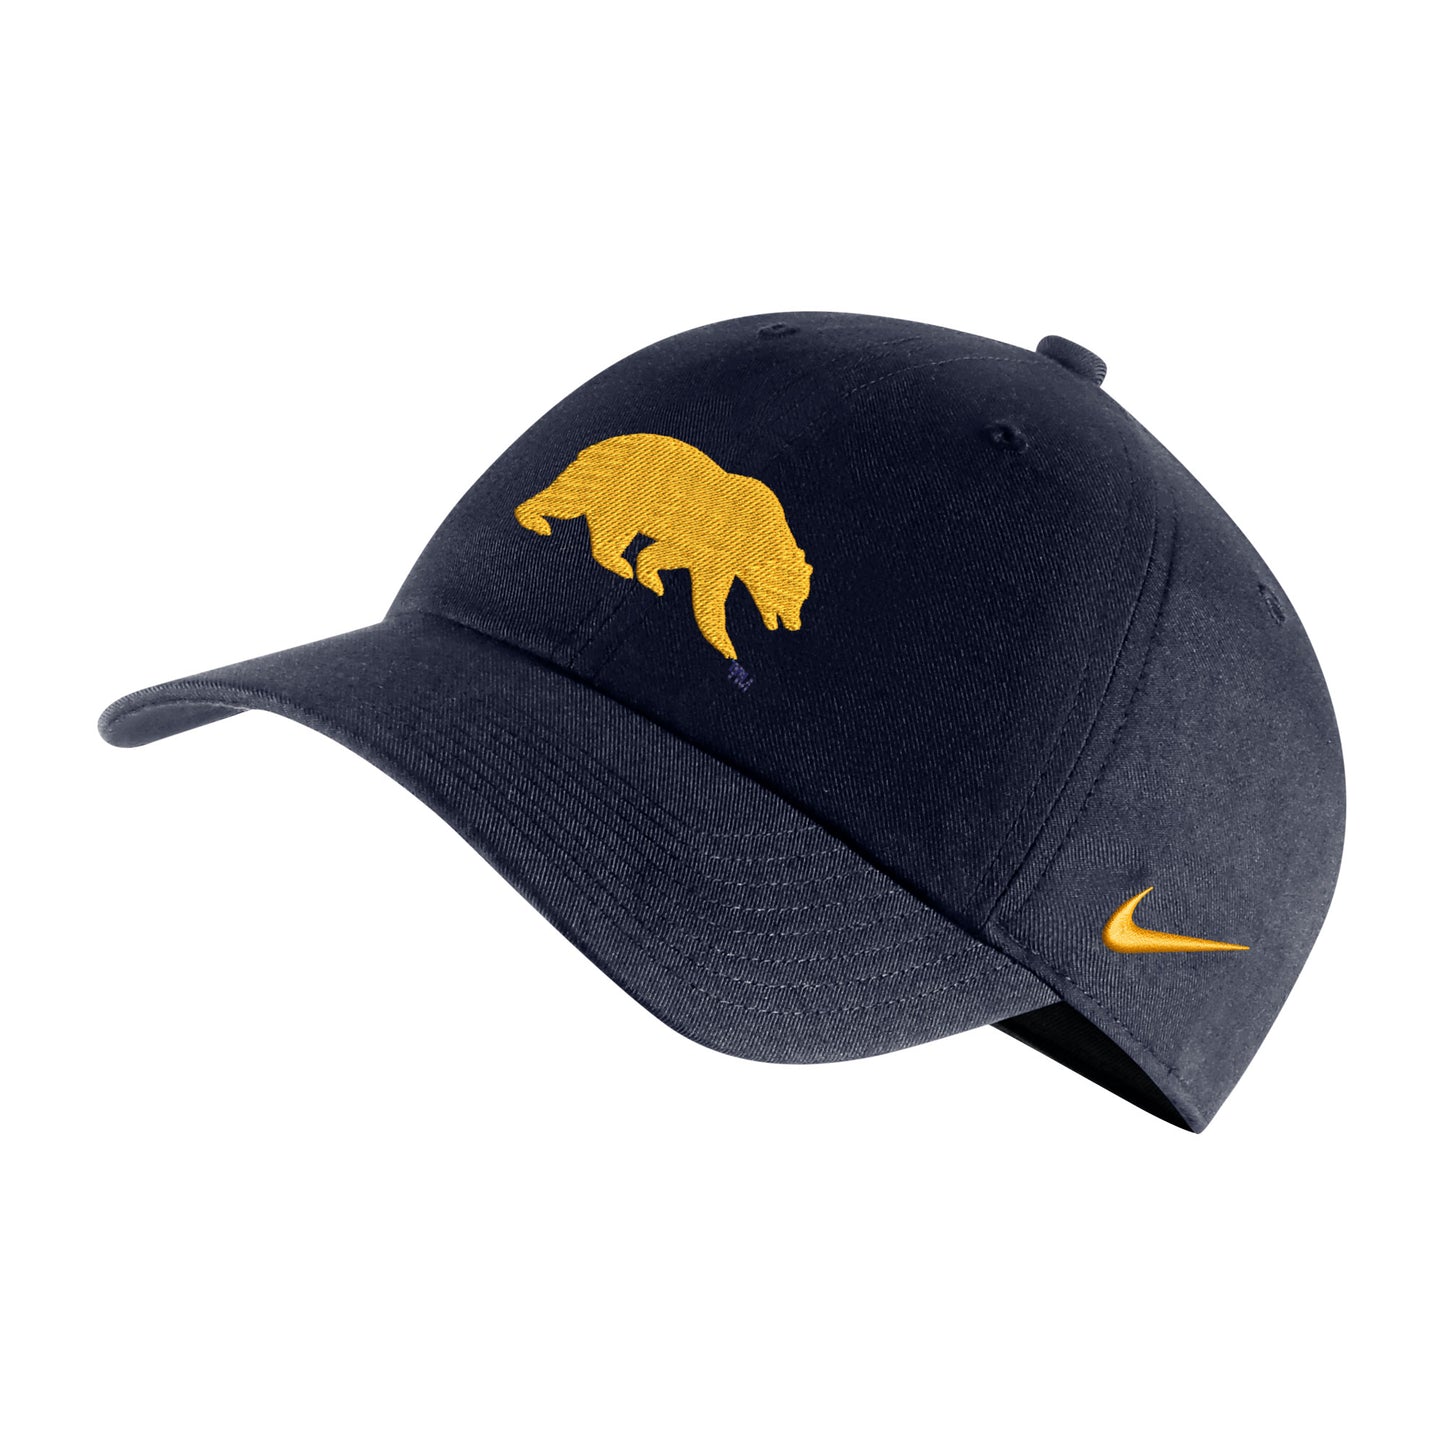 Copy of U.C. Berkeley Cal Berkeley arch & Nike swoosh campus hat-Navy-Shop College Wear